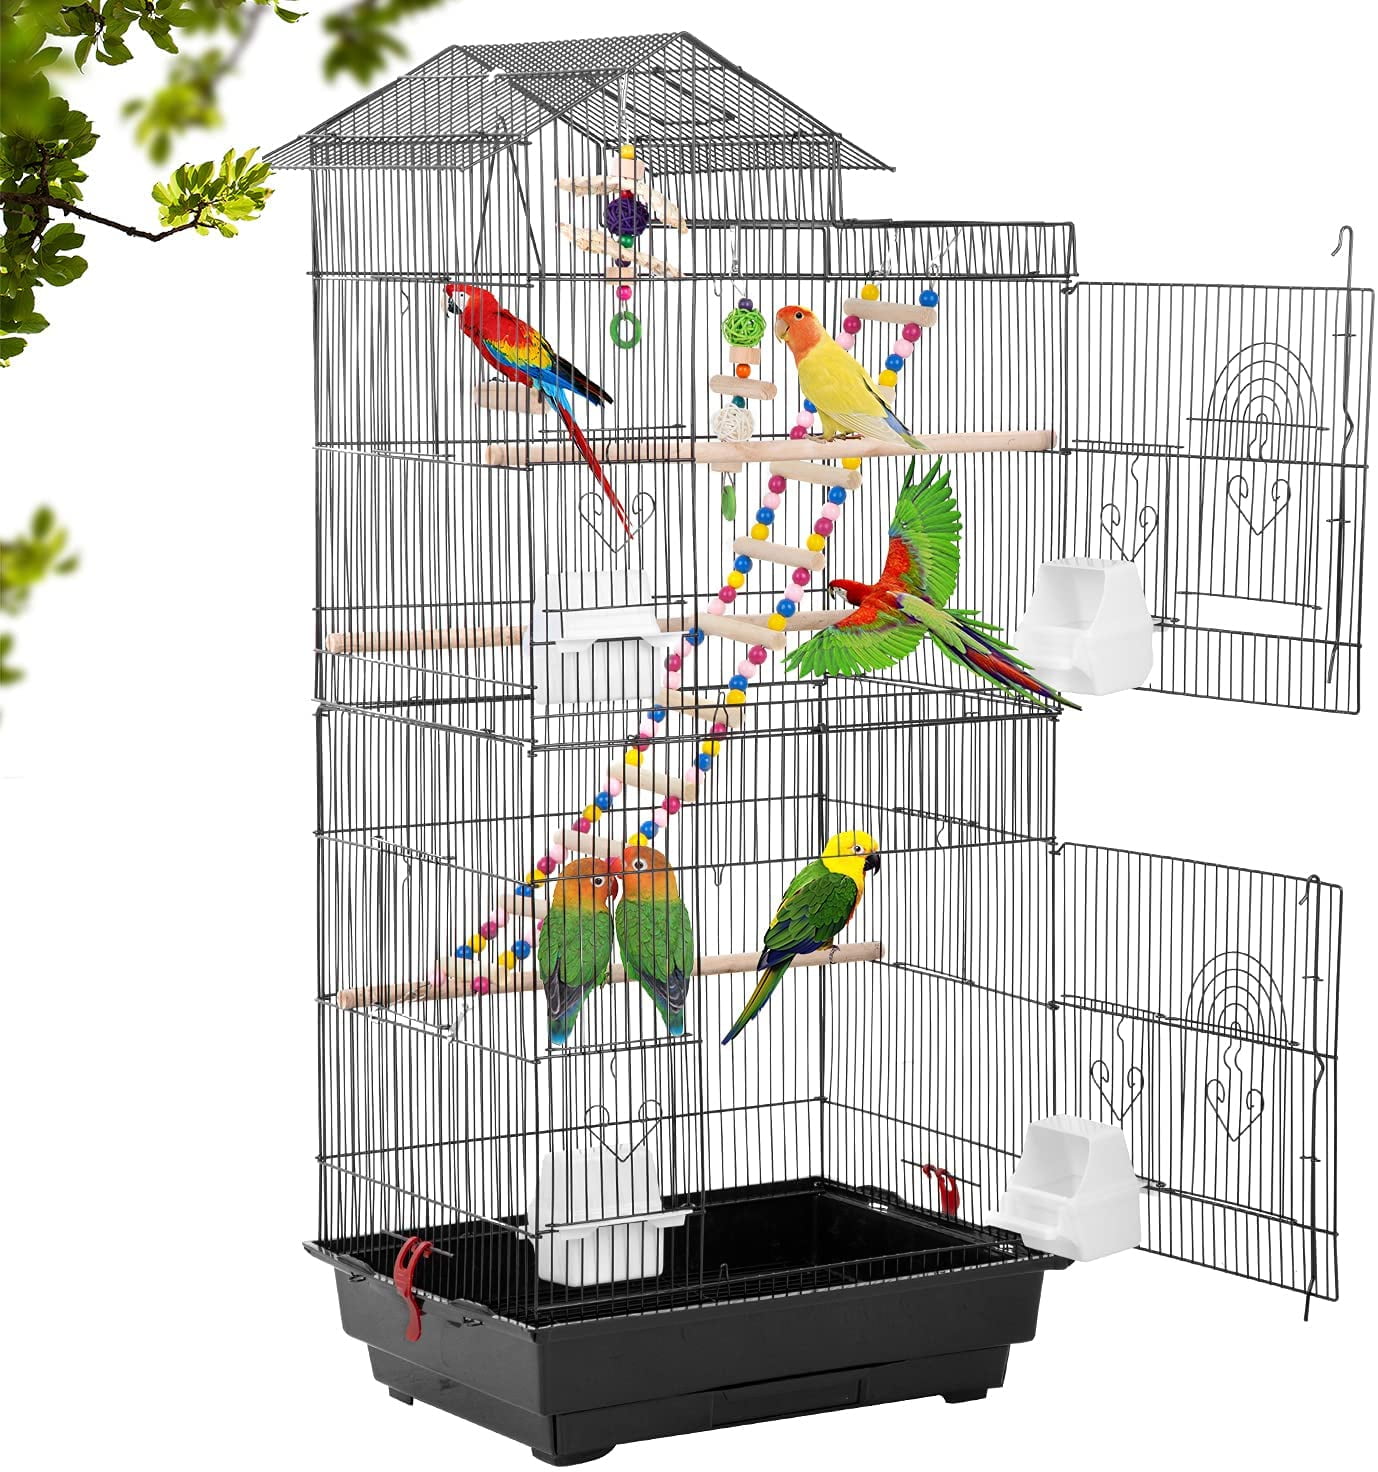 GJNVBDZSF Birdcage Acrylic Bird Cage Parrot Travel Carrier Cage Bird Cage for Parrots Senegal Long-tailed Parrot Small Bird Breeding Bird House Bulk